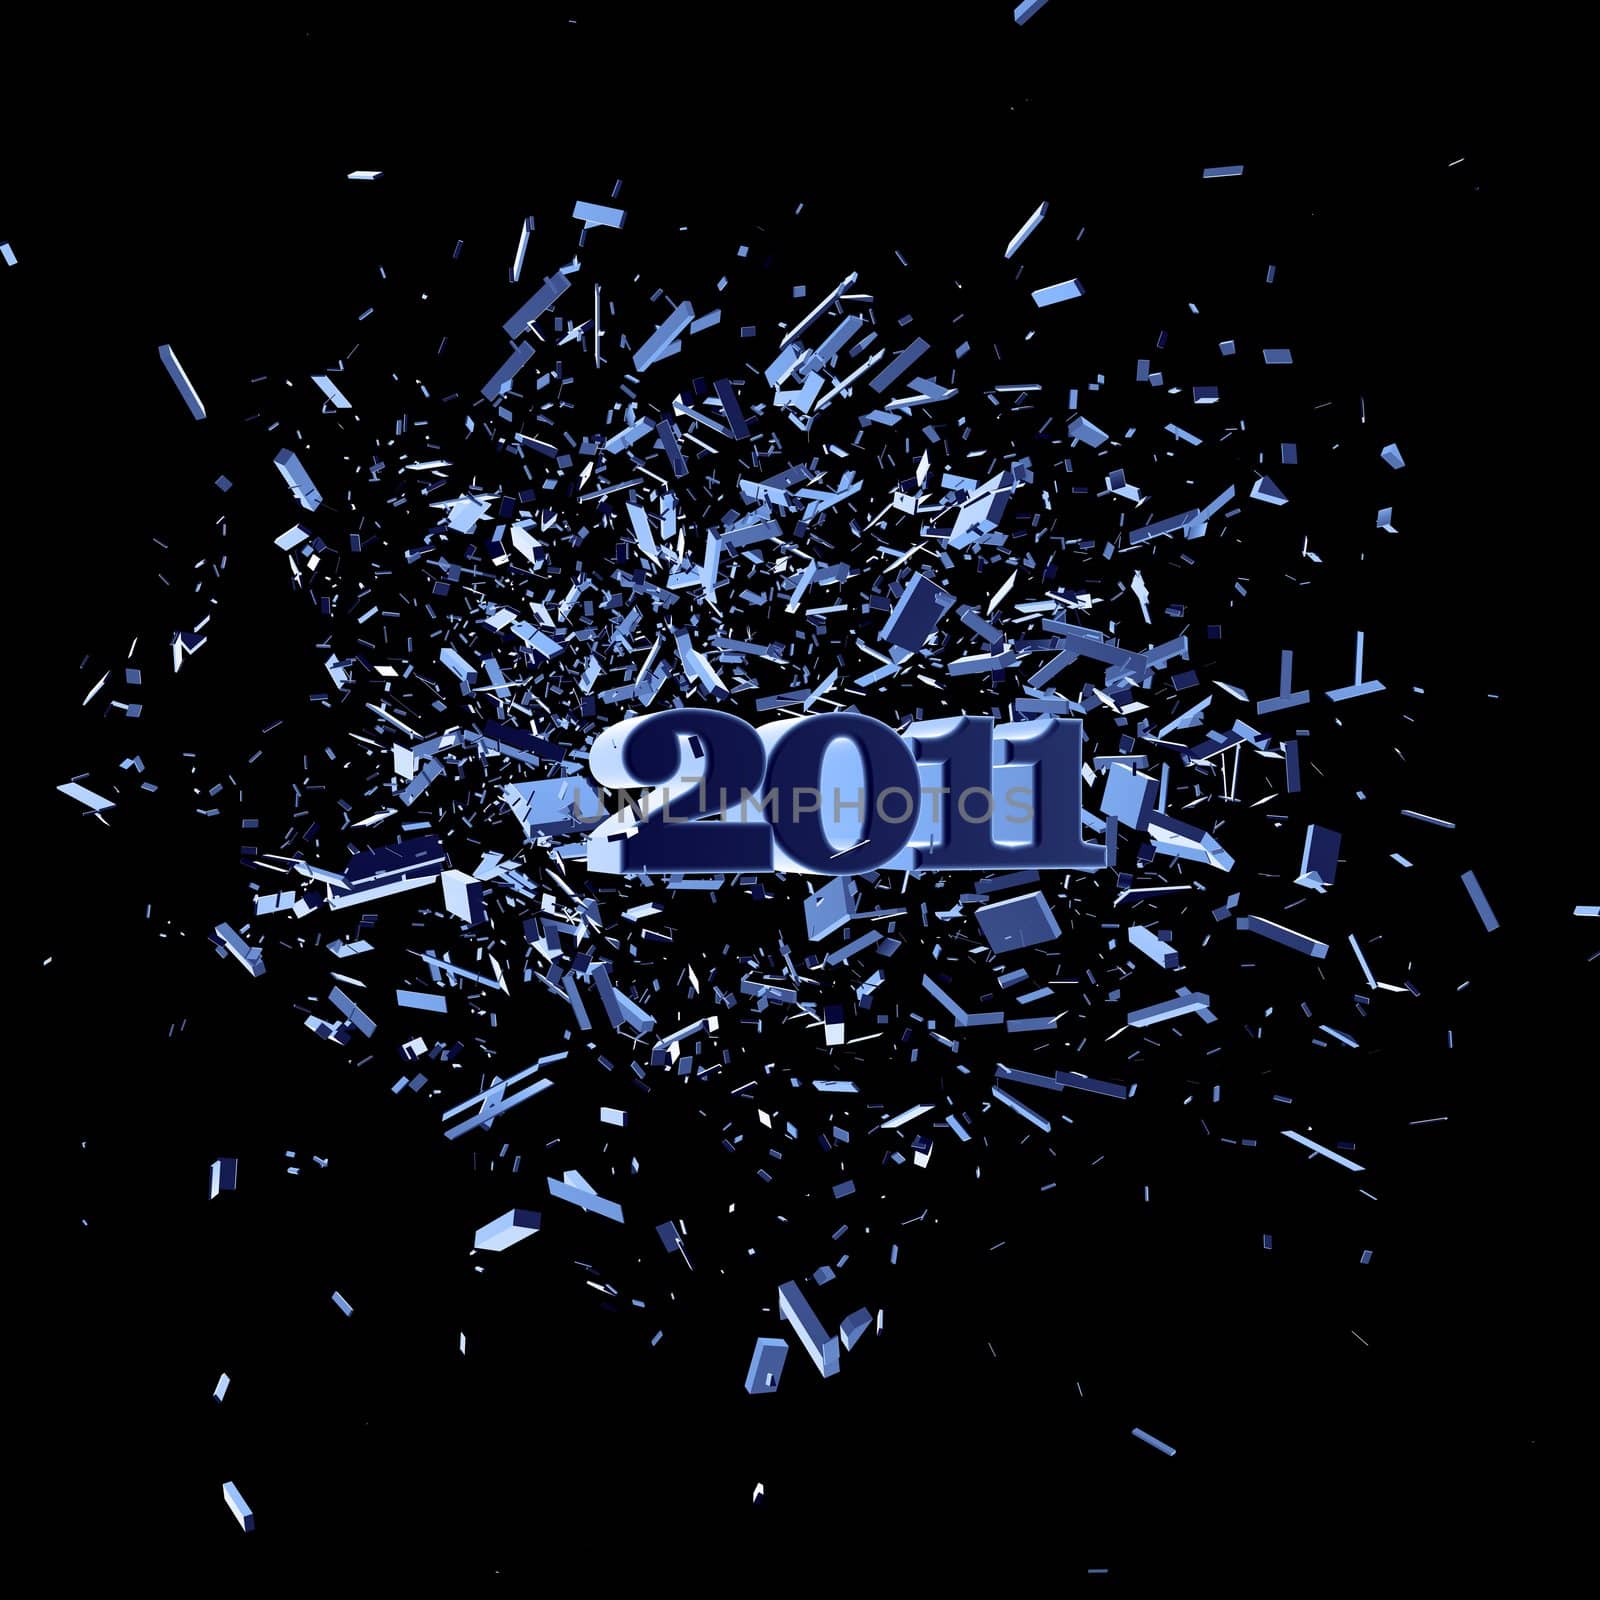 exploding year 2011 on black background - 3d illustration